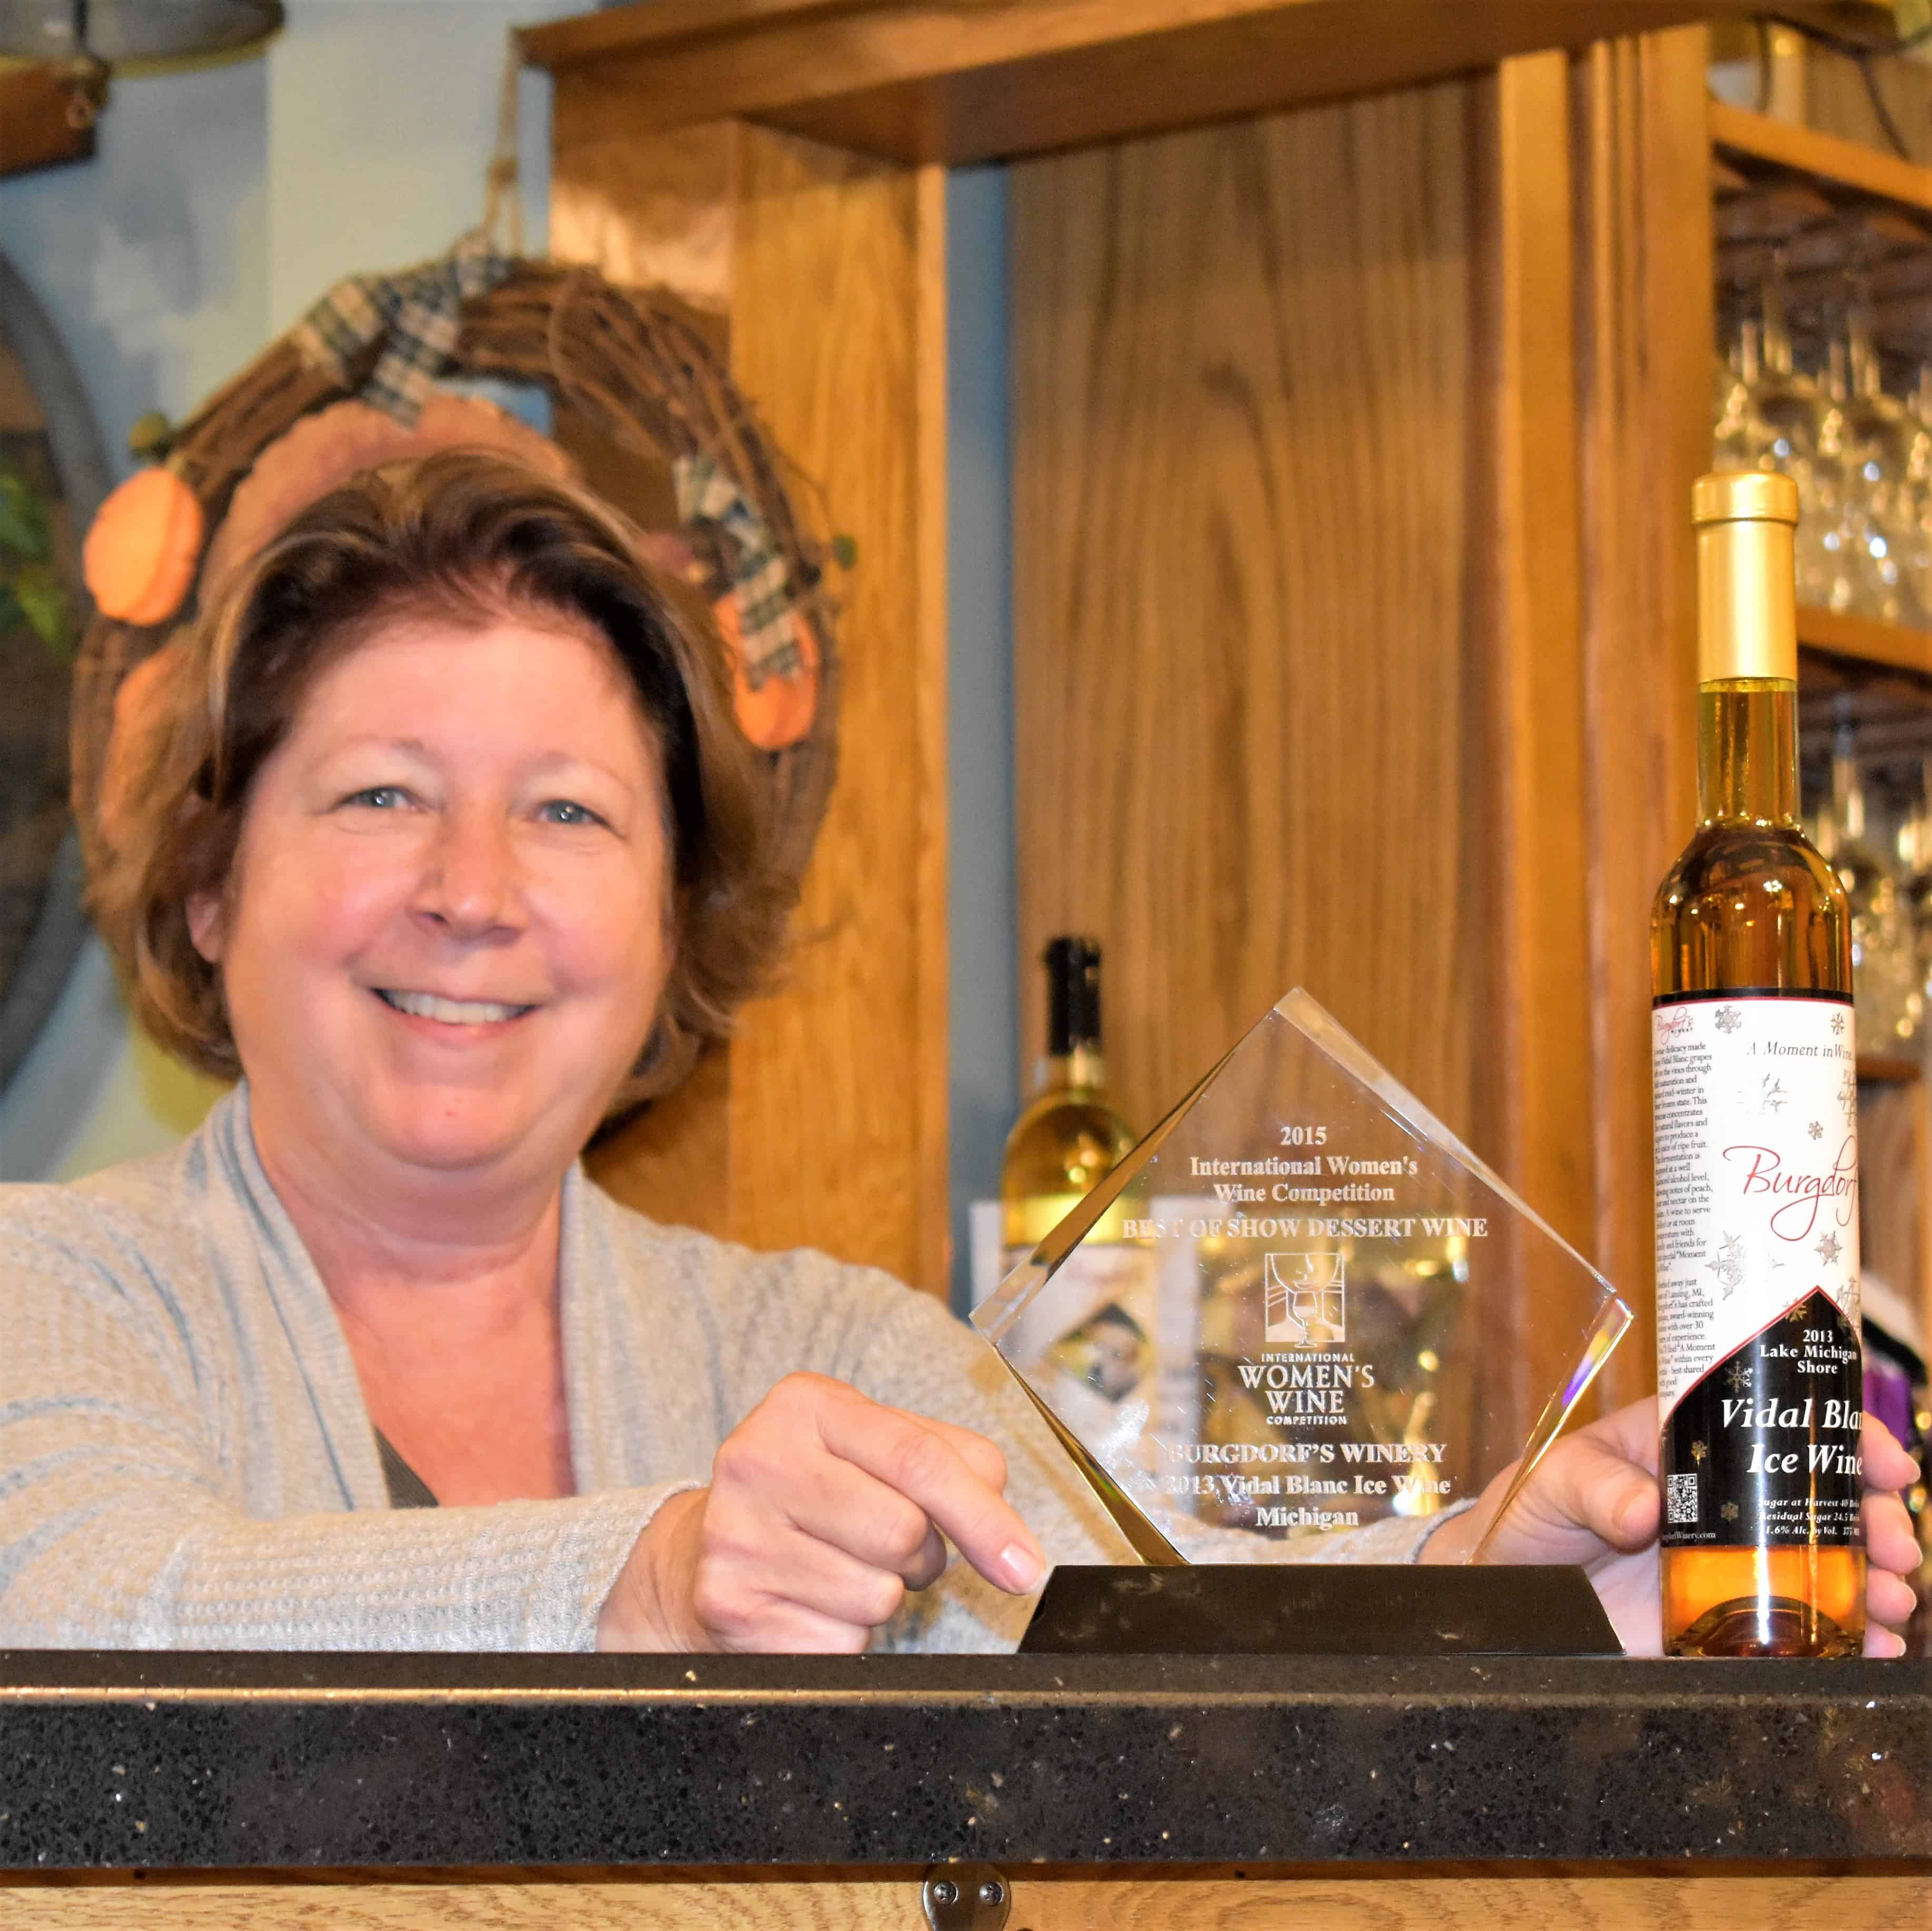 Burgdorf's Award-Winning Ice Wine